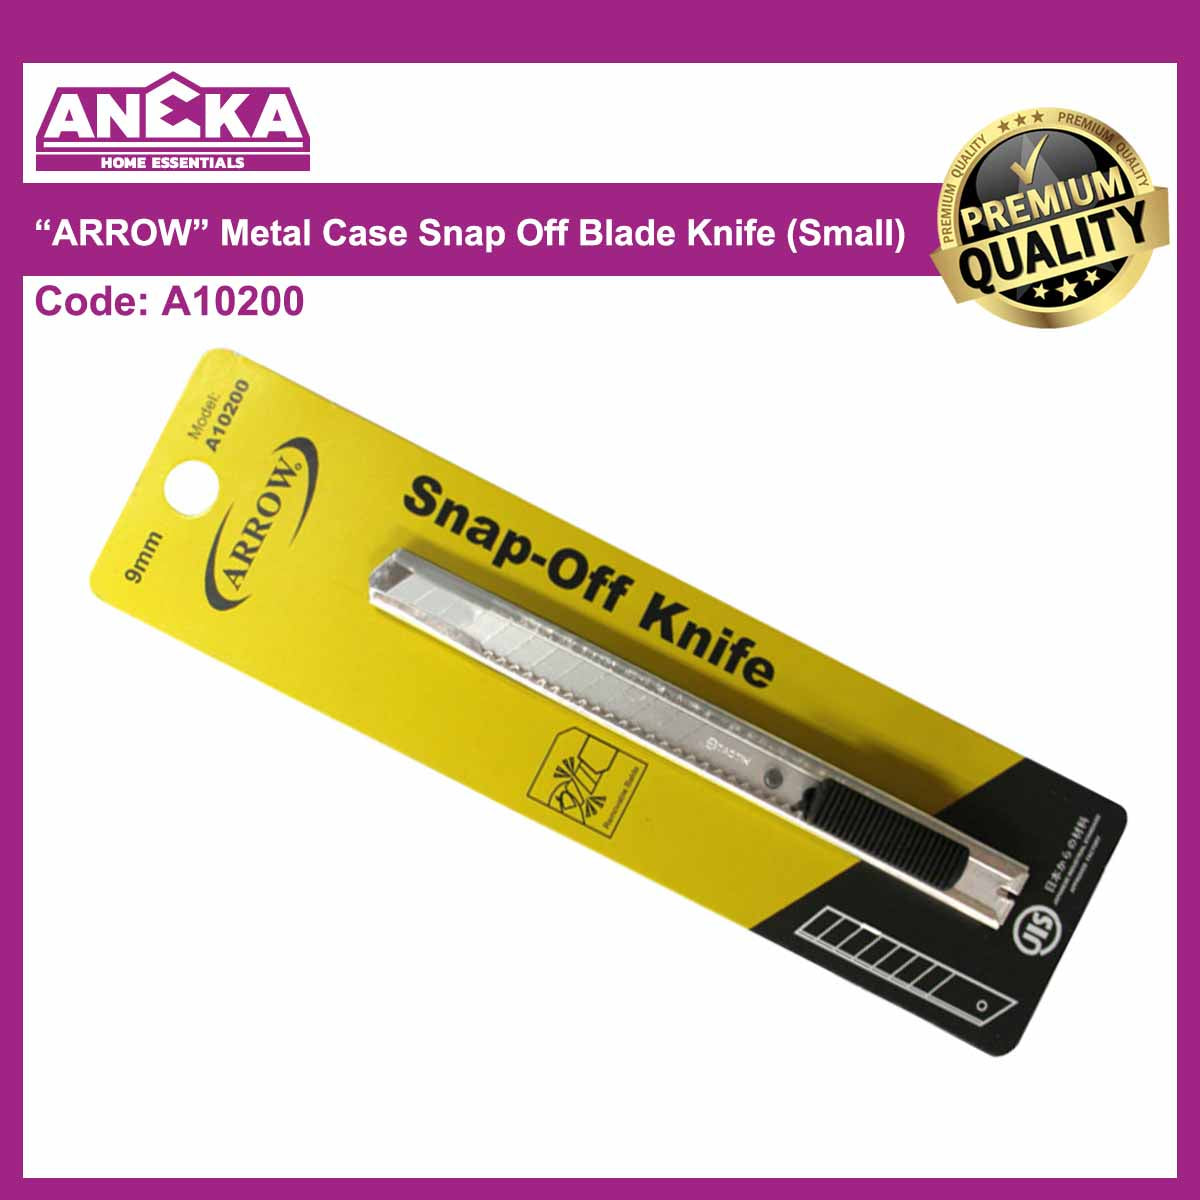 A10200 Arrow Metal Snap Off Blade Knife 9mm